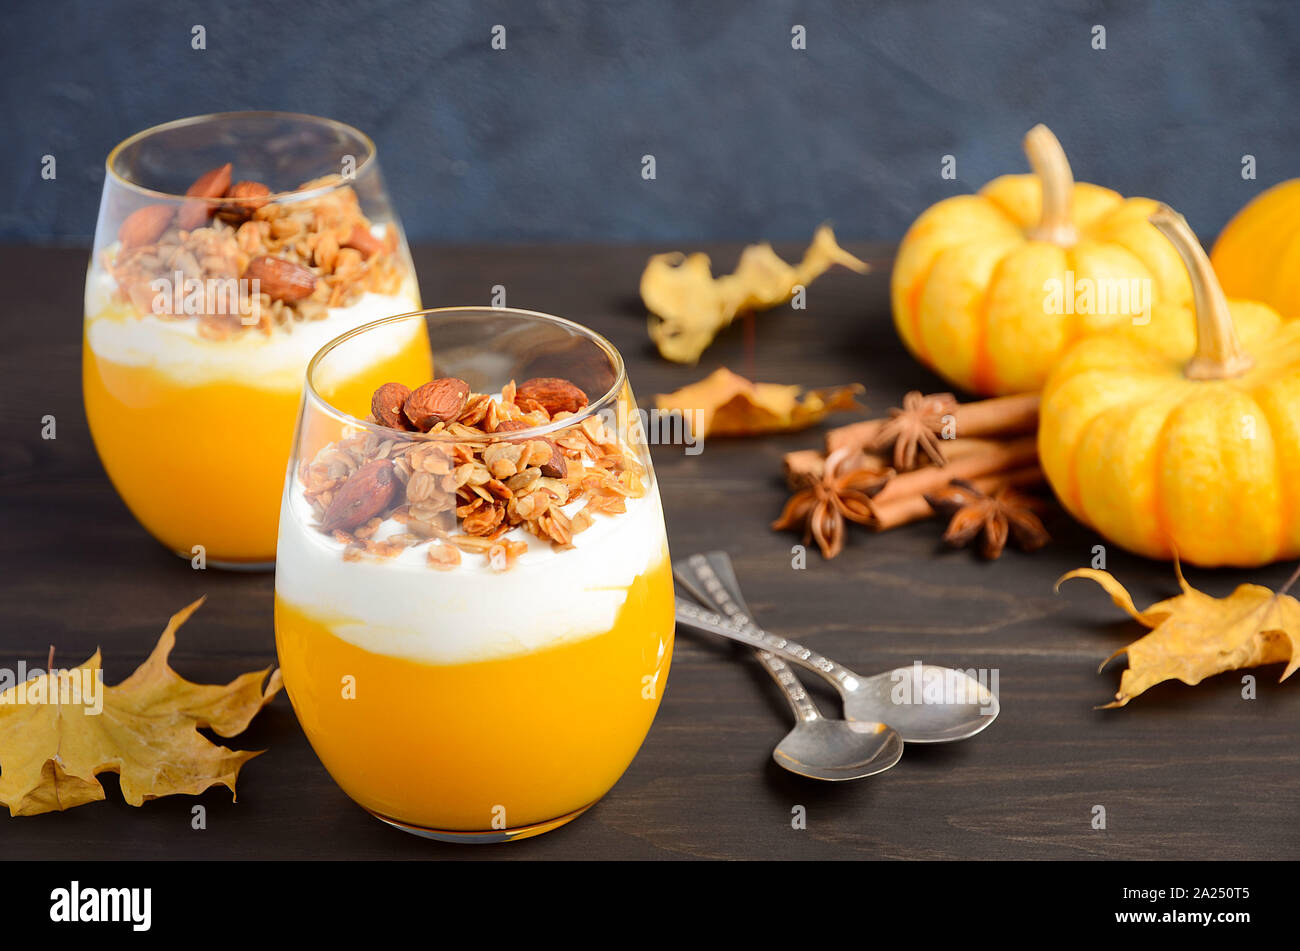 Pumpkin dessert with yogurt and homemade granola on dark wooden table. Stock Photo